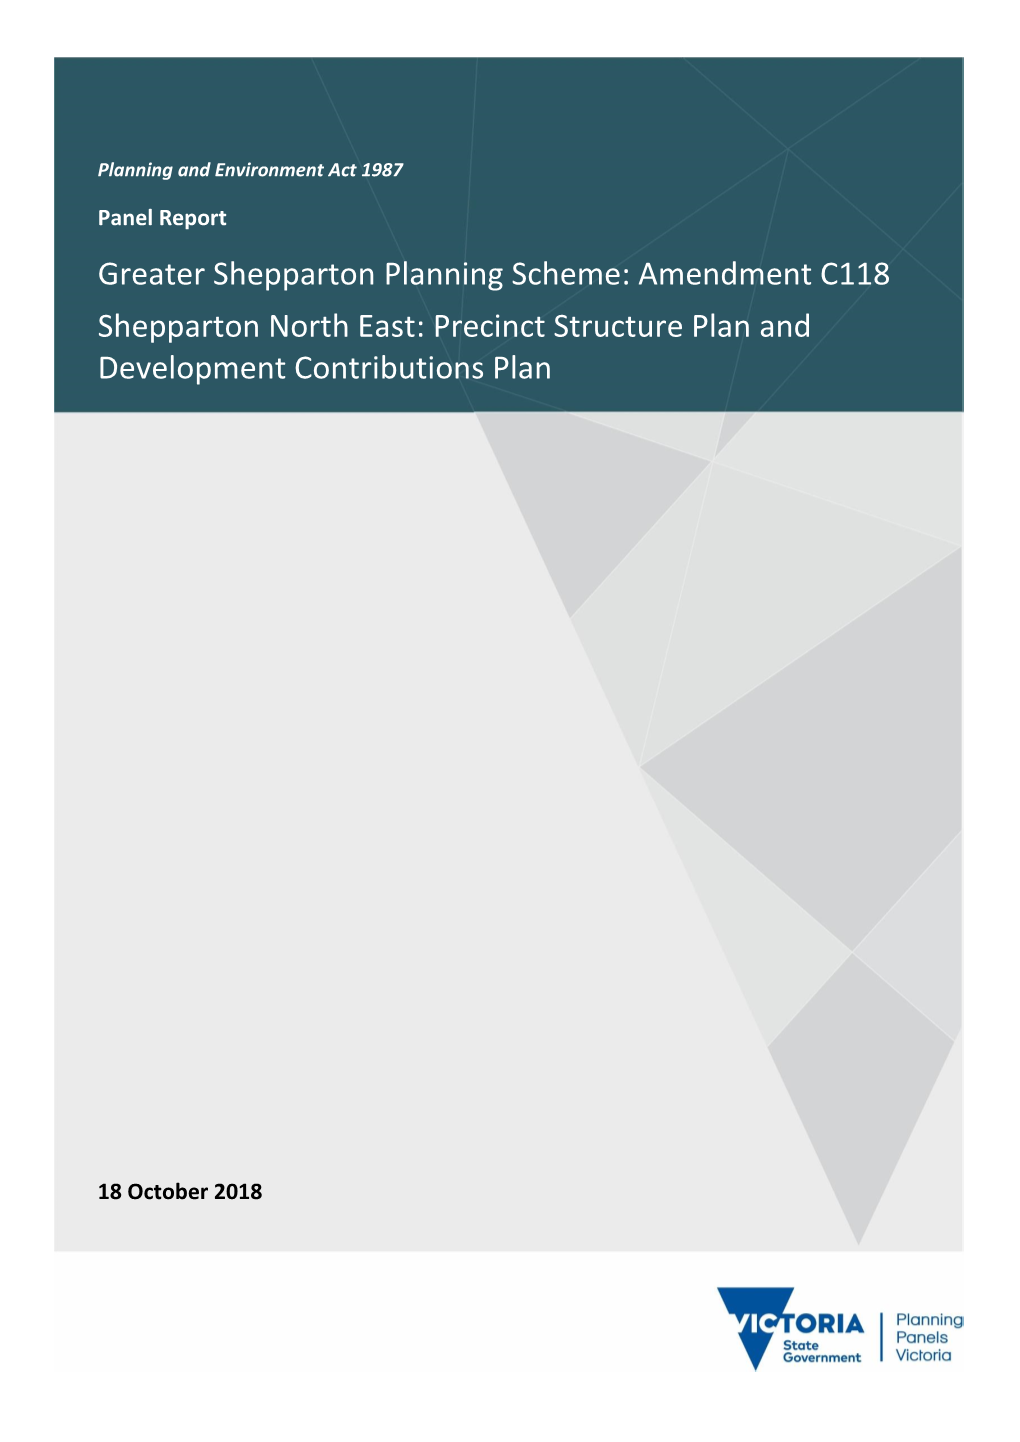 Greater Shepparton Planning Scheme: Amendment C118 Shepparton North East: Precinct Structure Plan and Development Contributions Plan